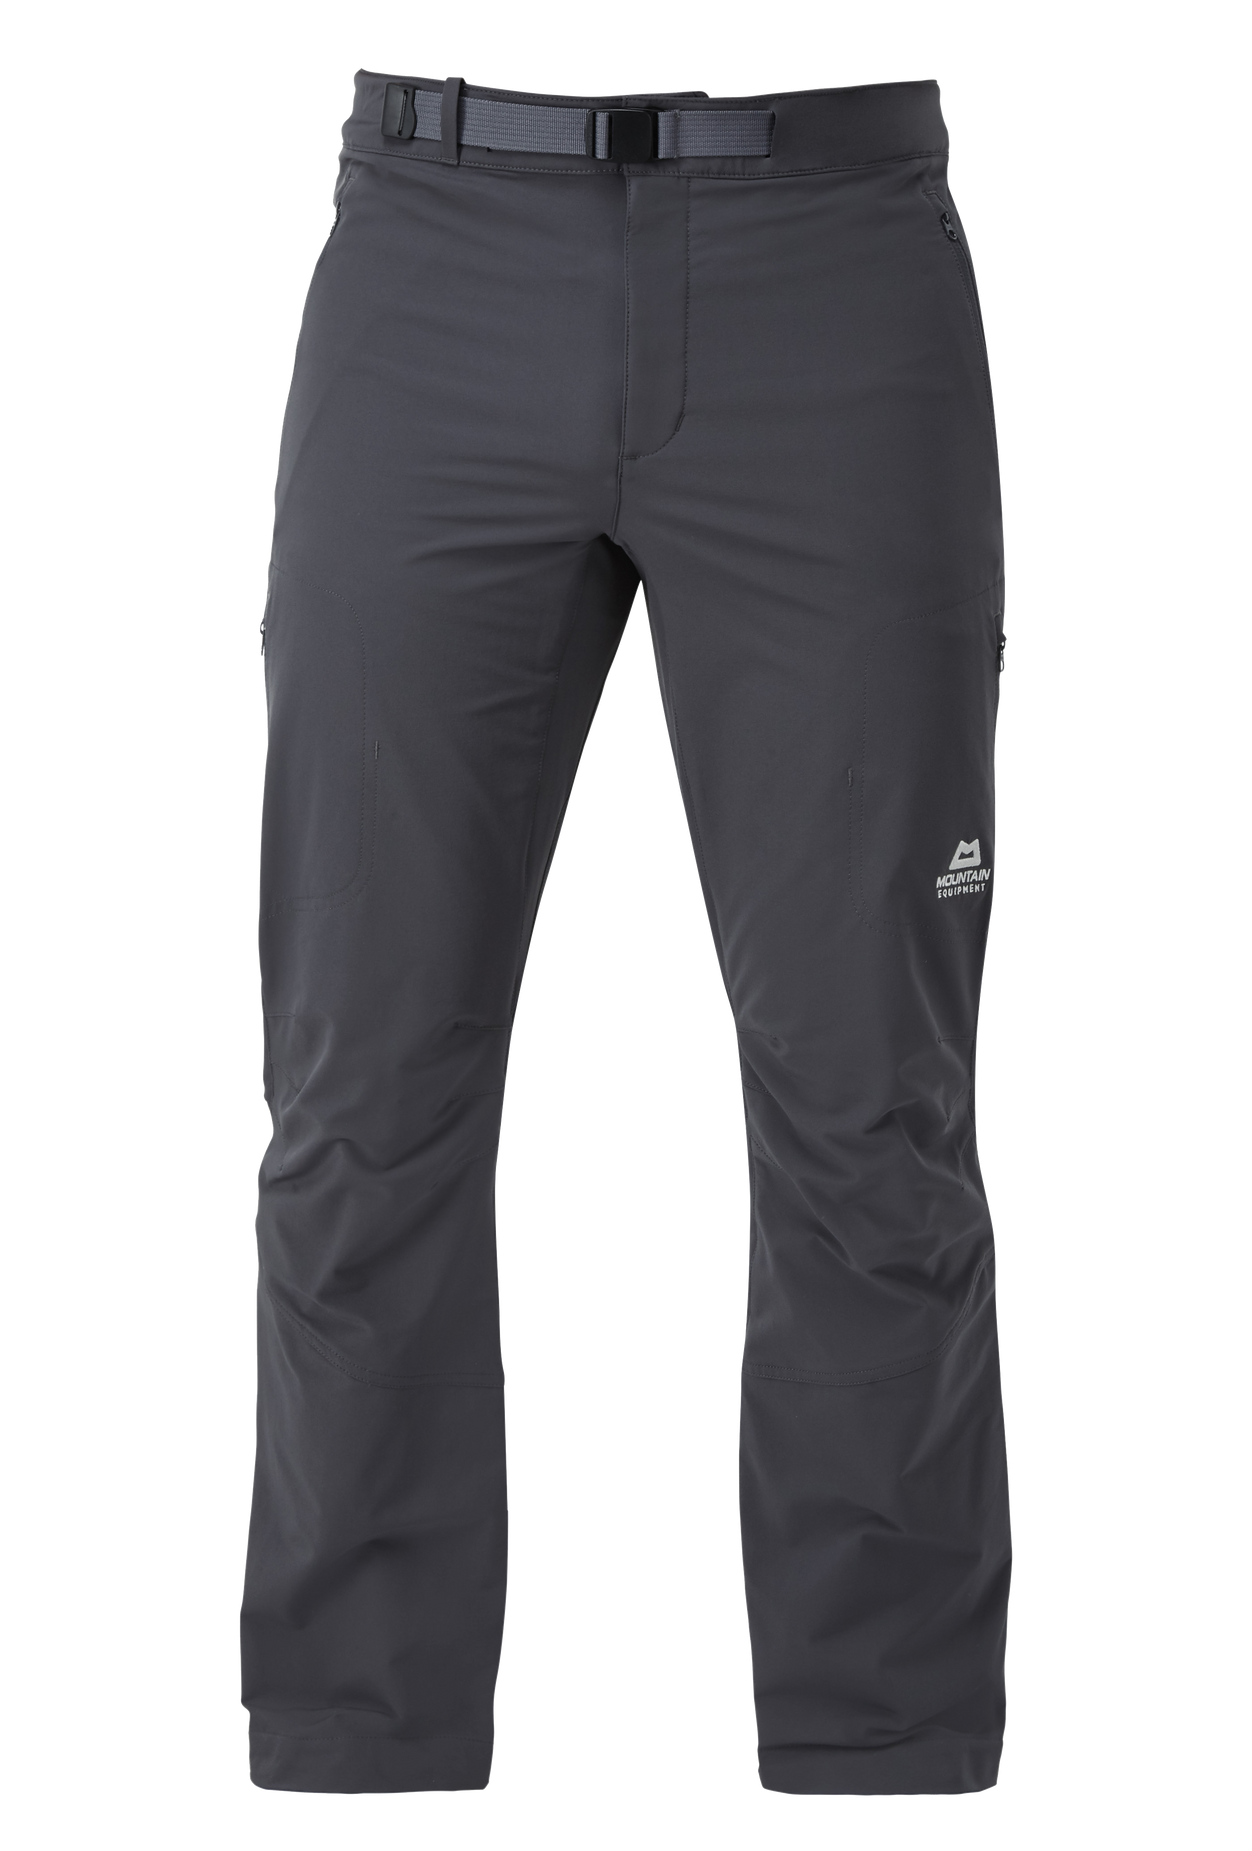 Mountain equipment pánské softshellové kalhoty Ibex Mountain Mens Pant - prodloužené Barva: Anvil Grey, Velikost: 28/XS